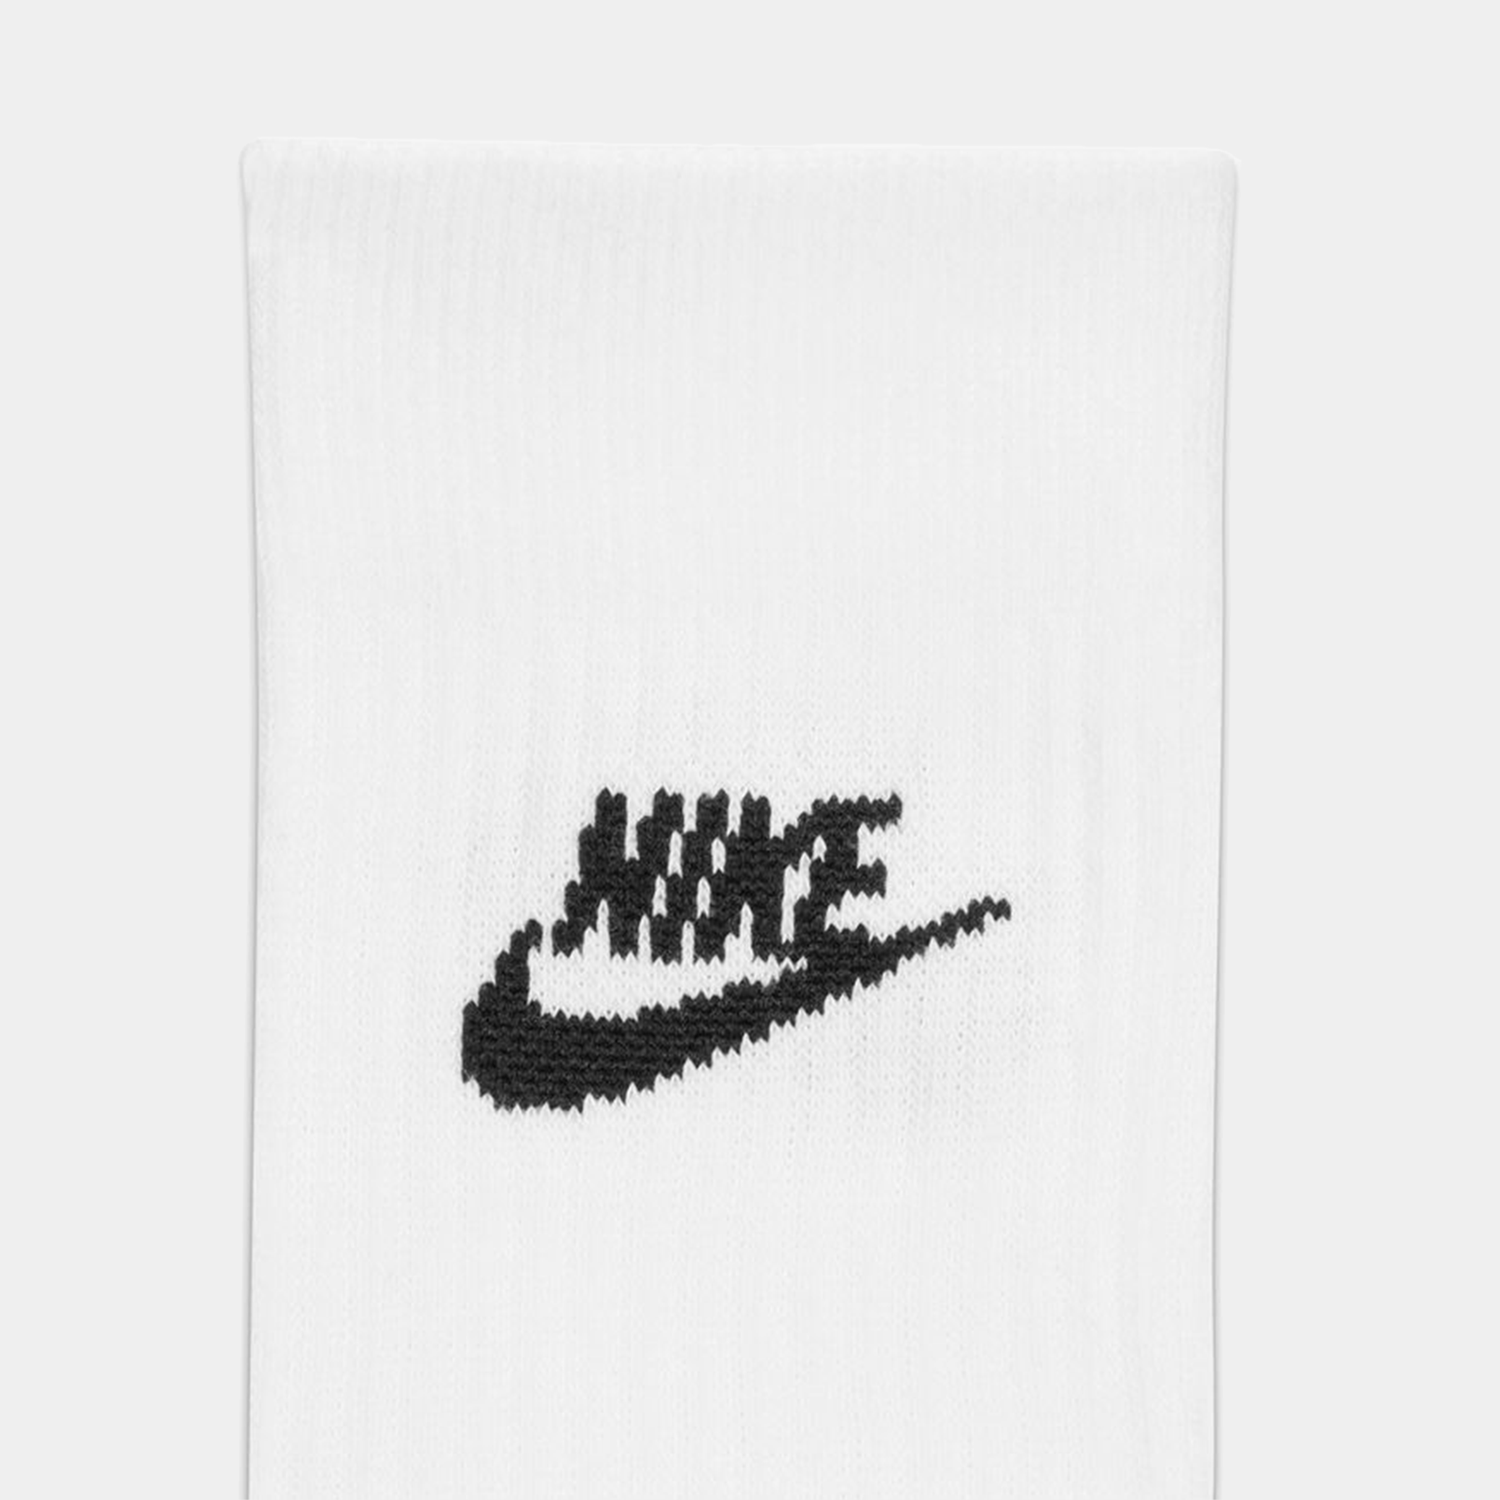 Everyday Essential Nike SB Chaussettes en white-black pour Femme – TITUS